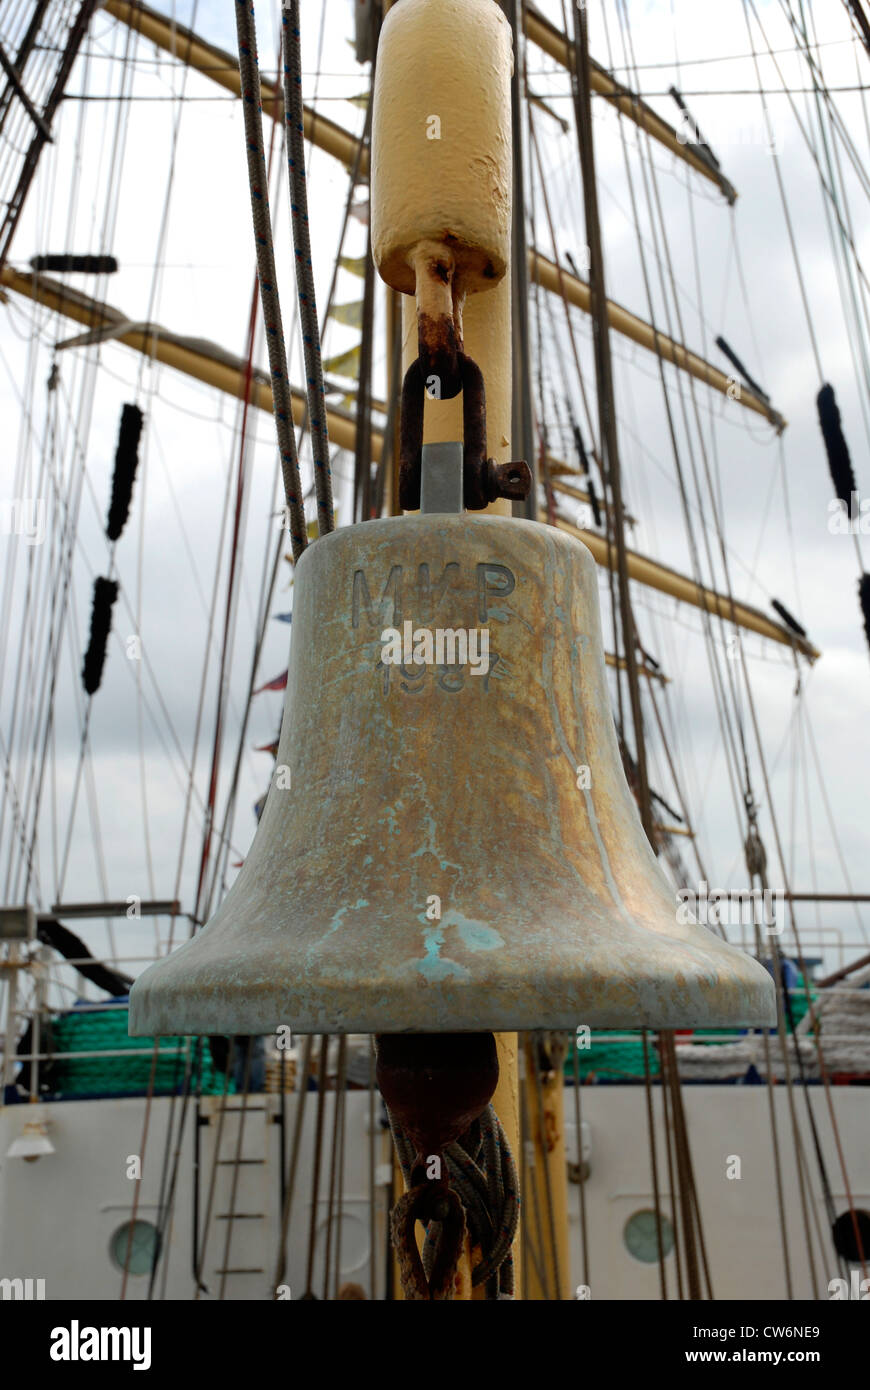 ship's bell of tall ship 'Mir', Netherlands, Den Helder Stock Photo